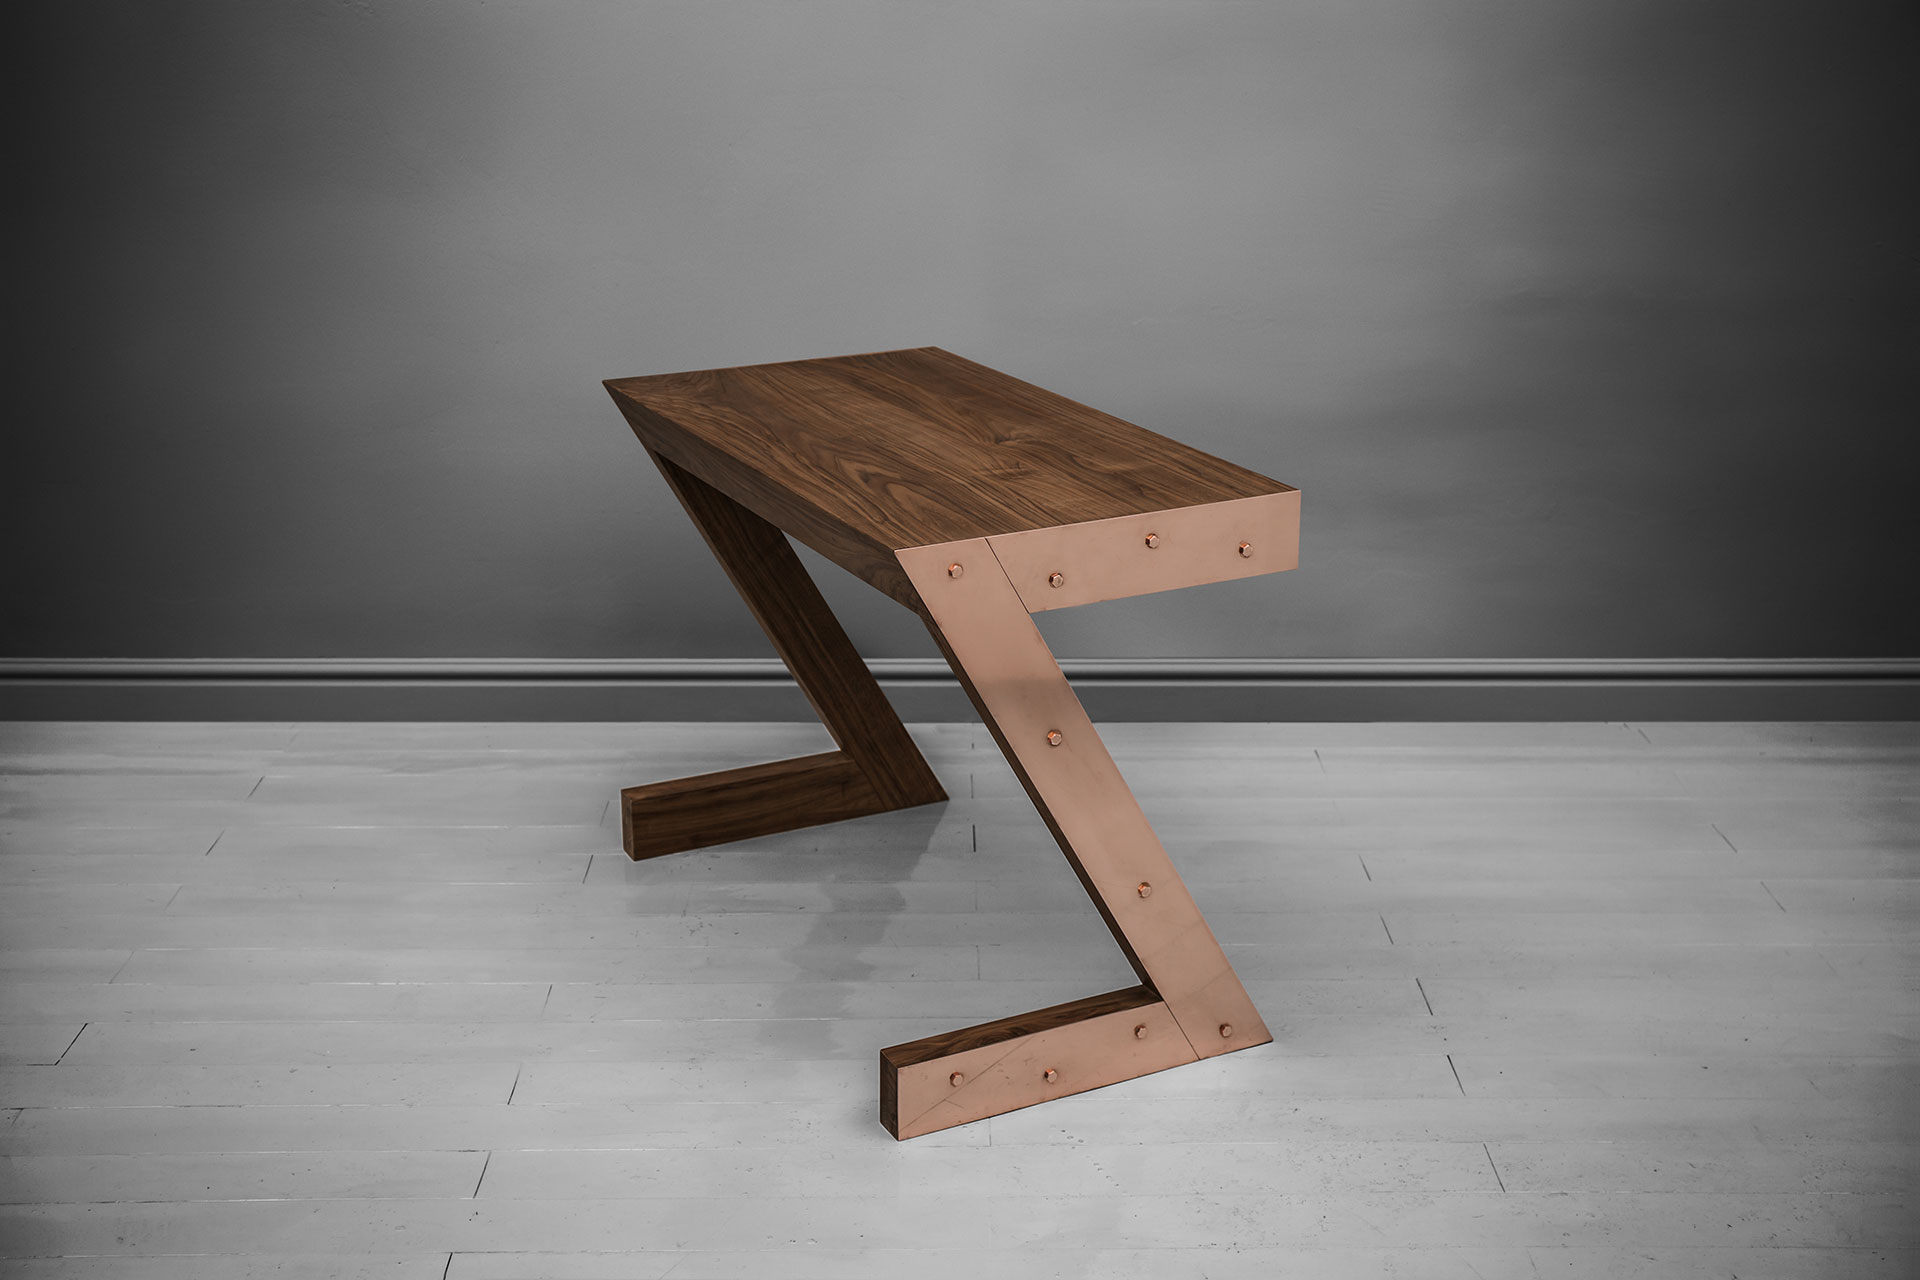 Z shaped American walnut desk inspired by industrial style